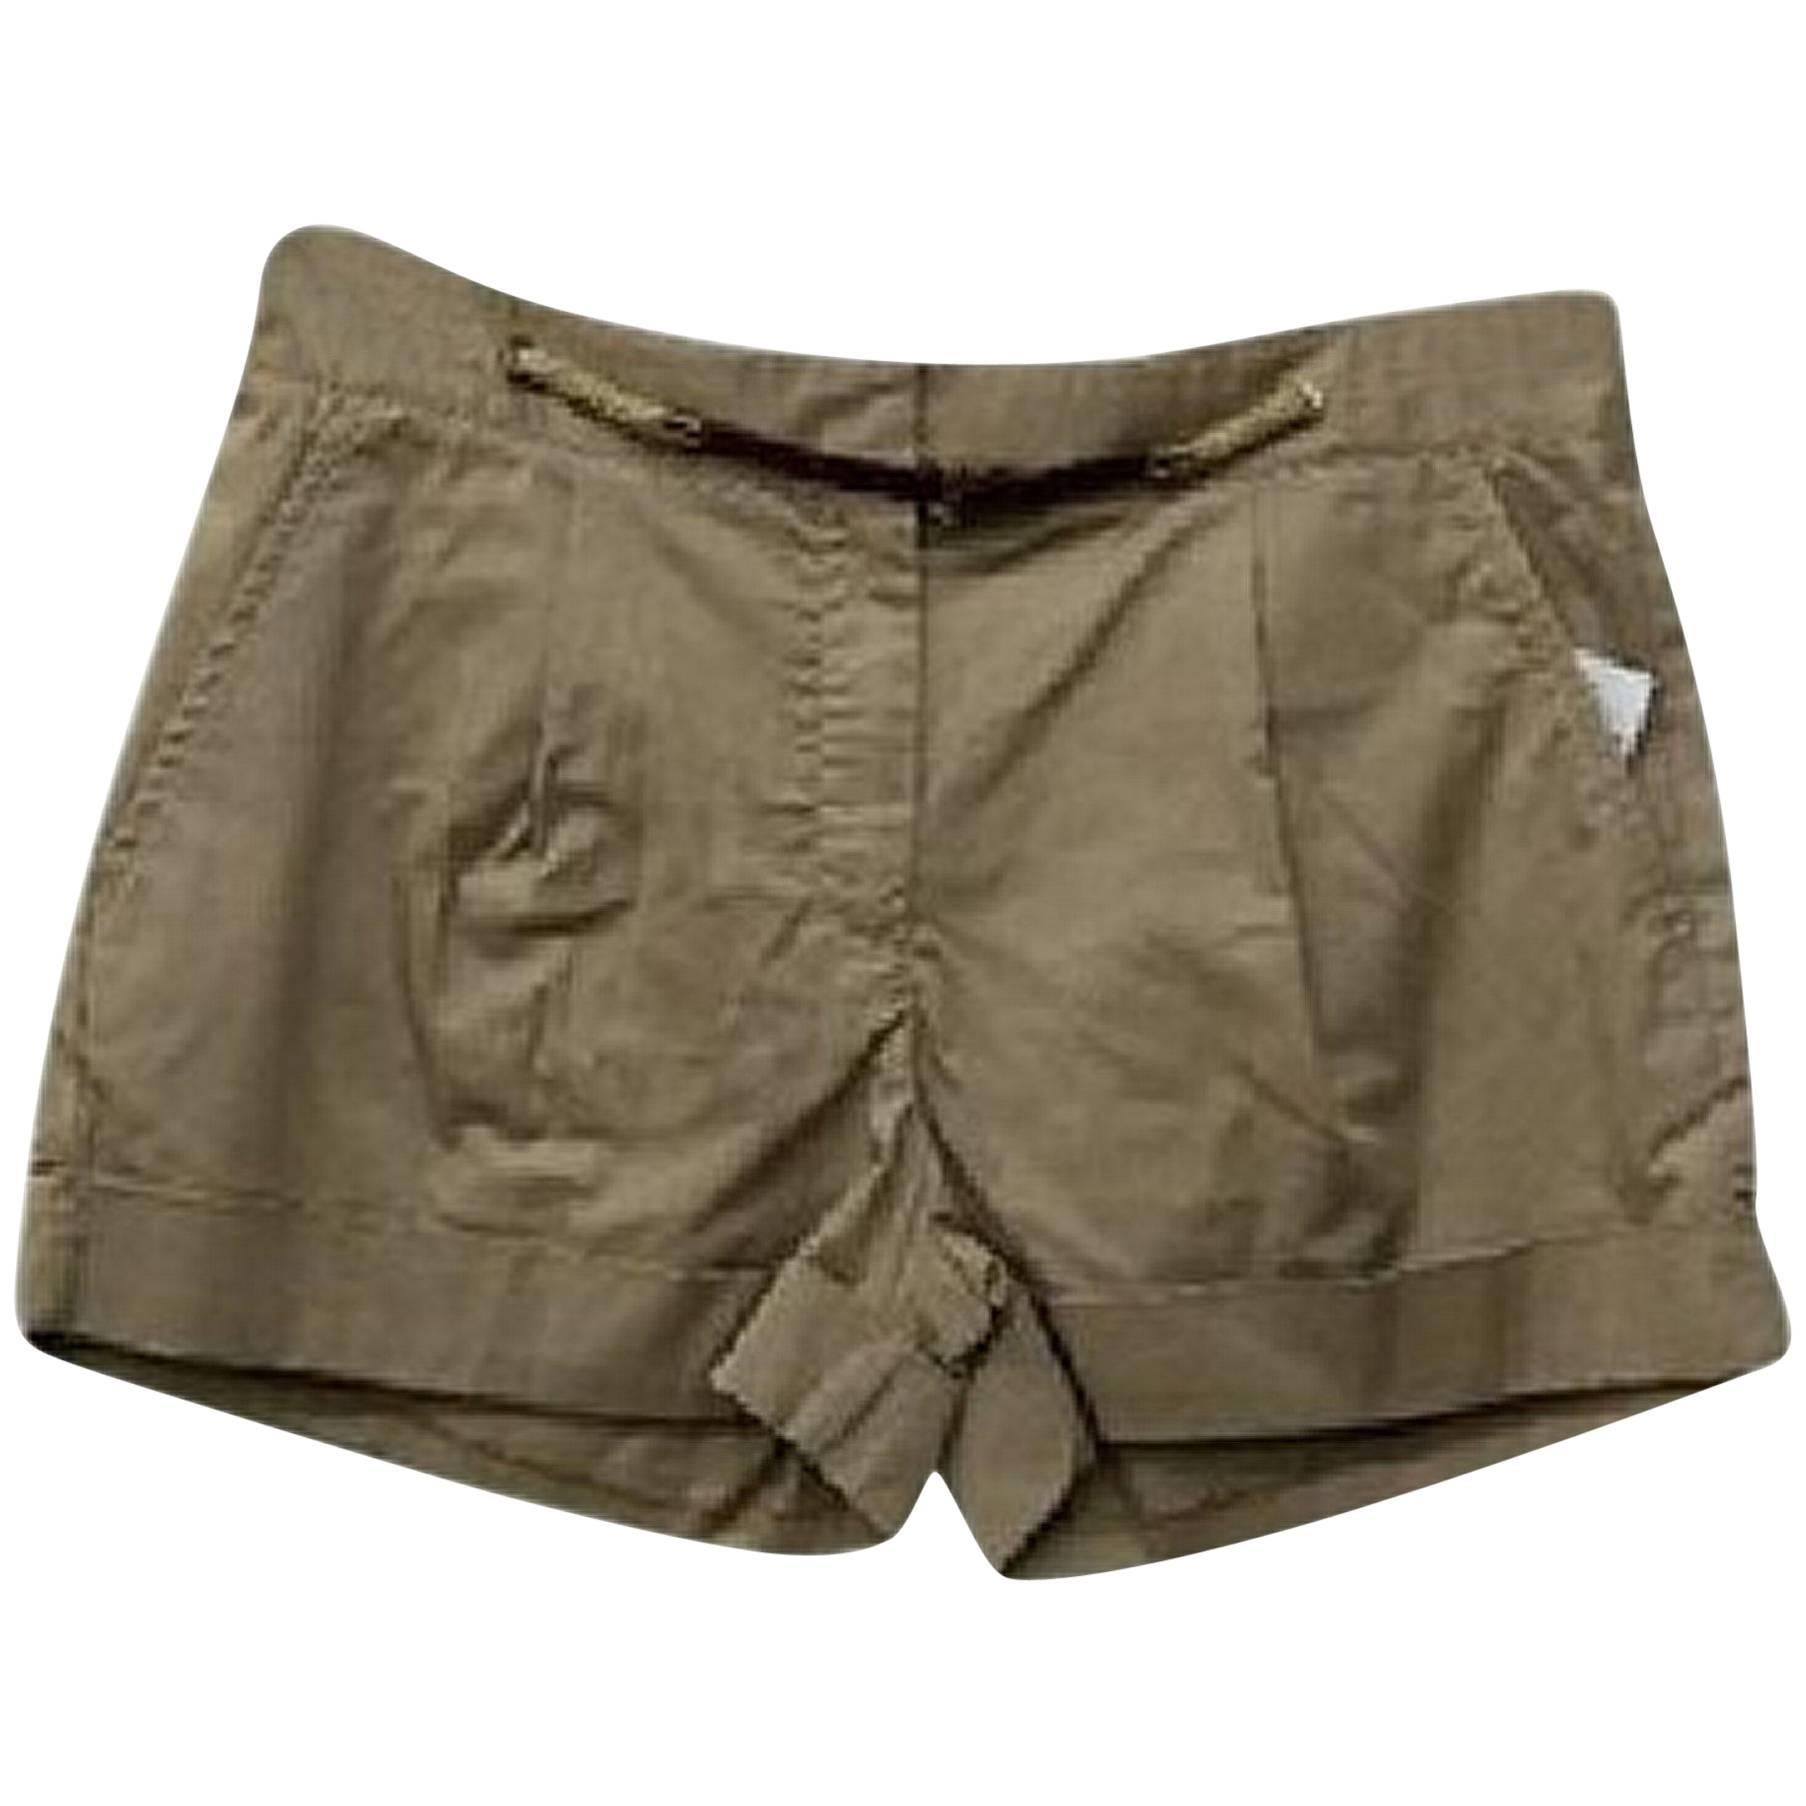 Michael Kors Shorts - Size: 8 (M, 29, 30)